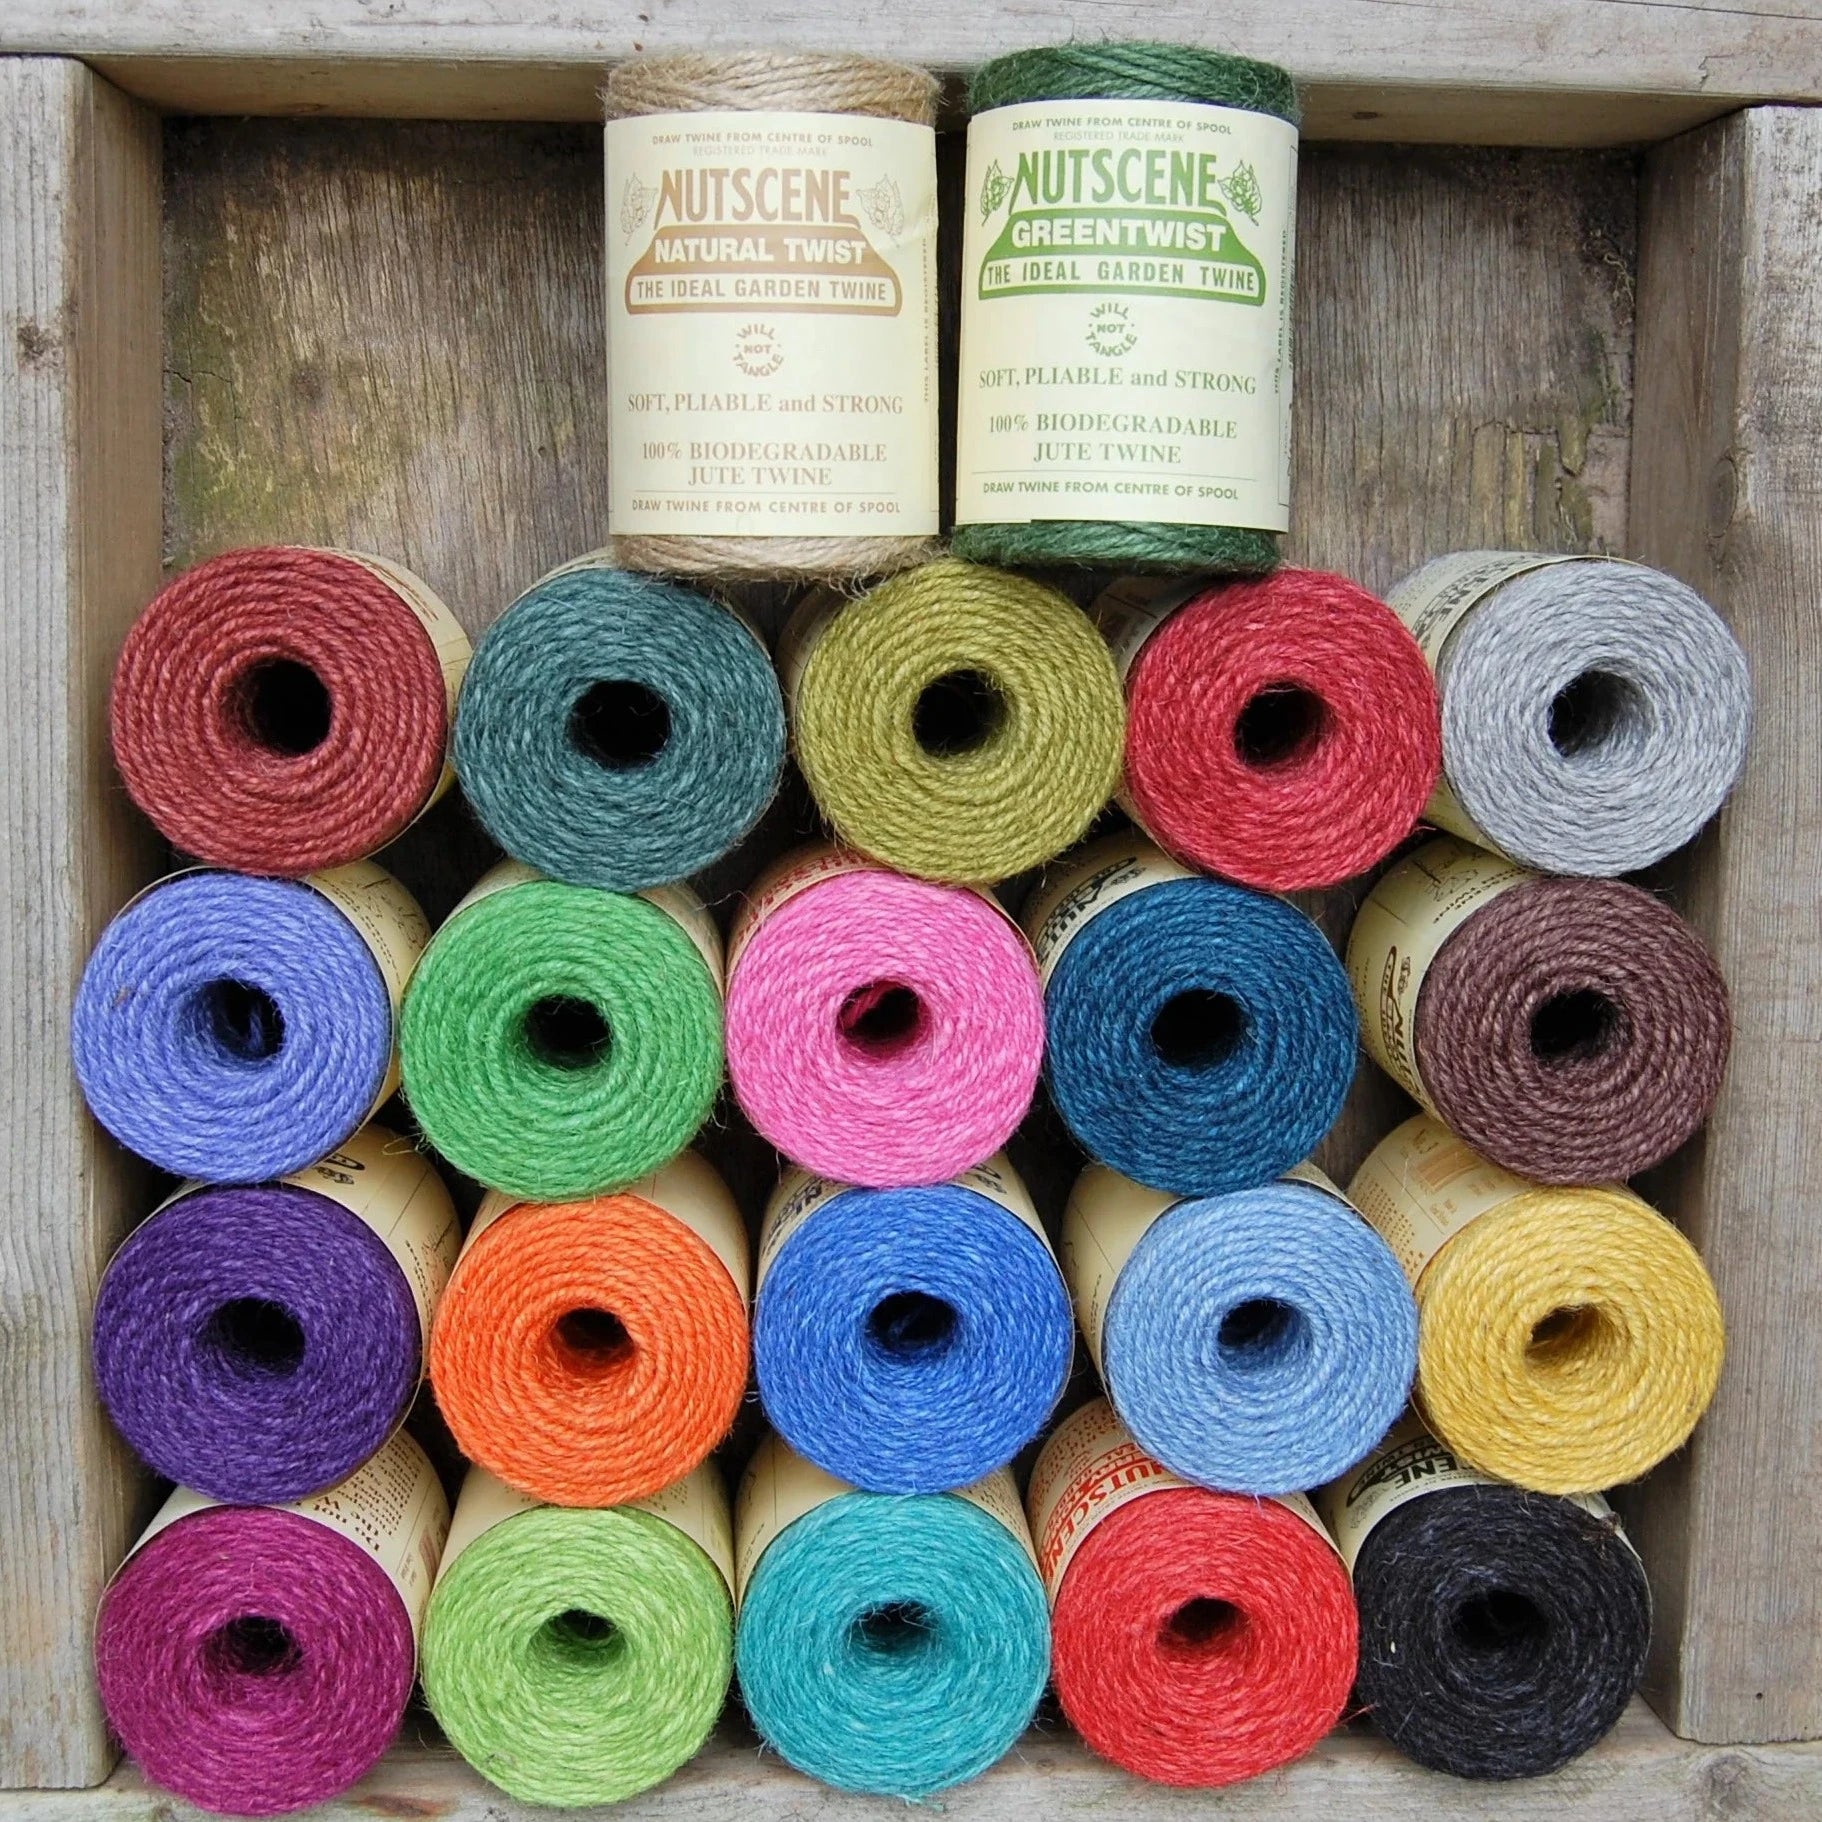 Colorful Jute Garden Twine Spools - Nutscene's Collection – Hidden